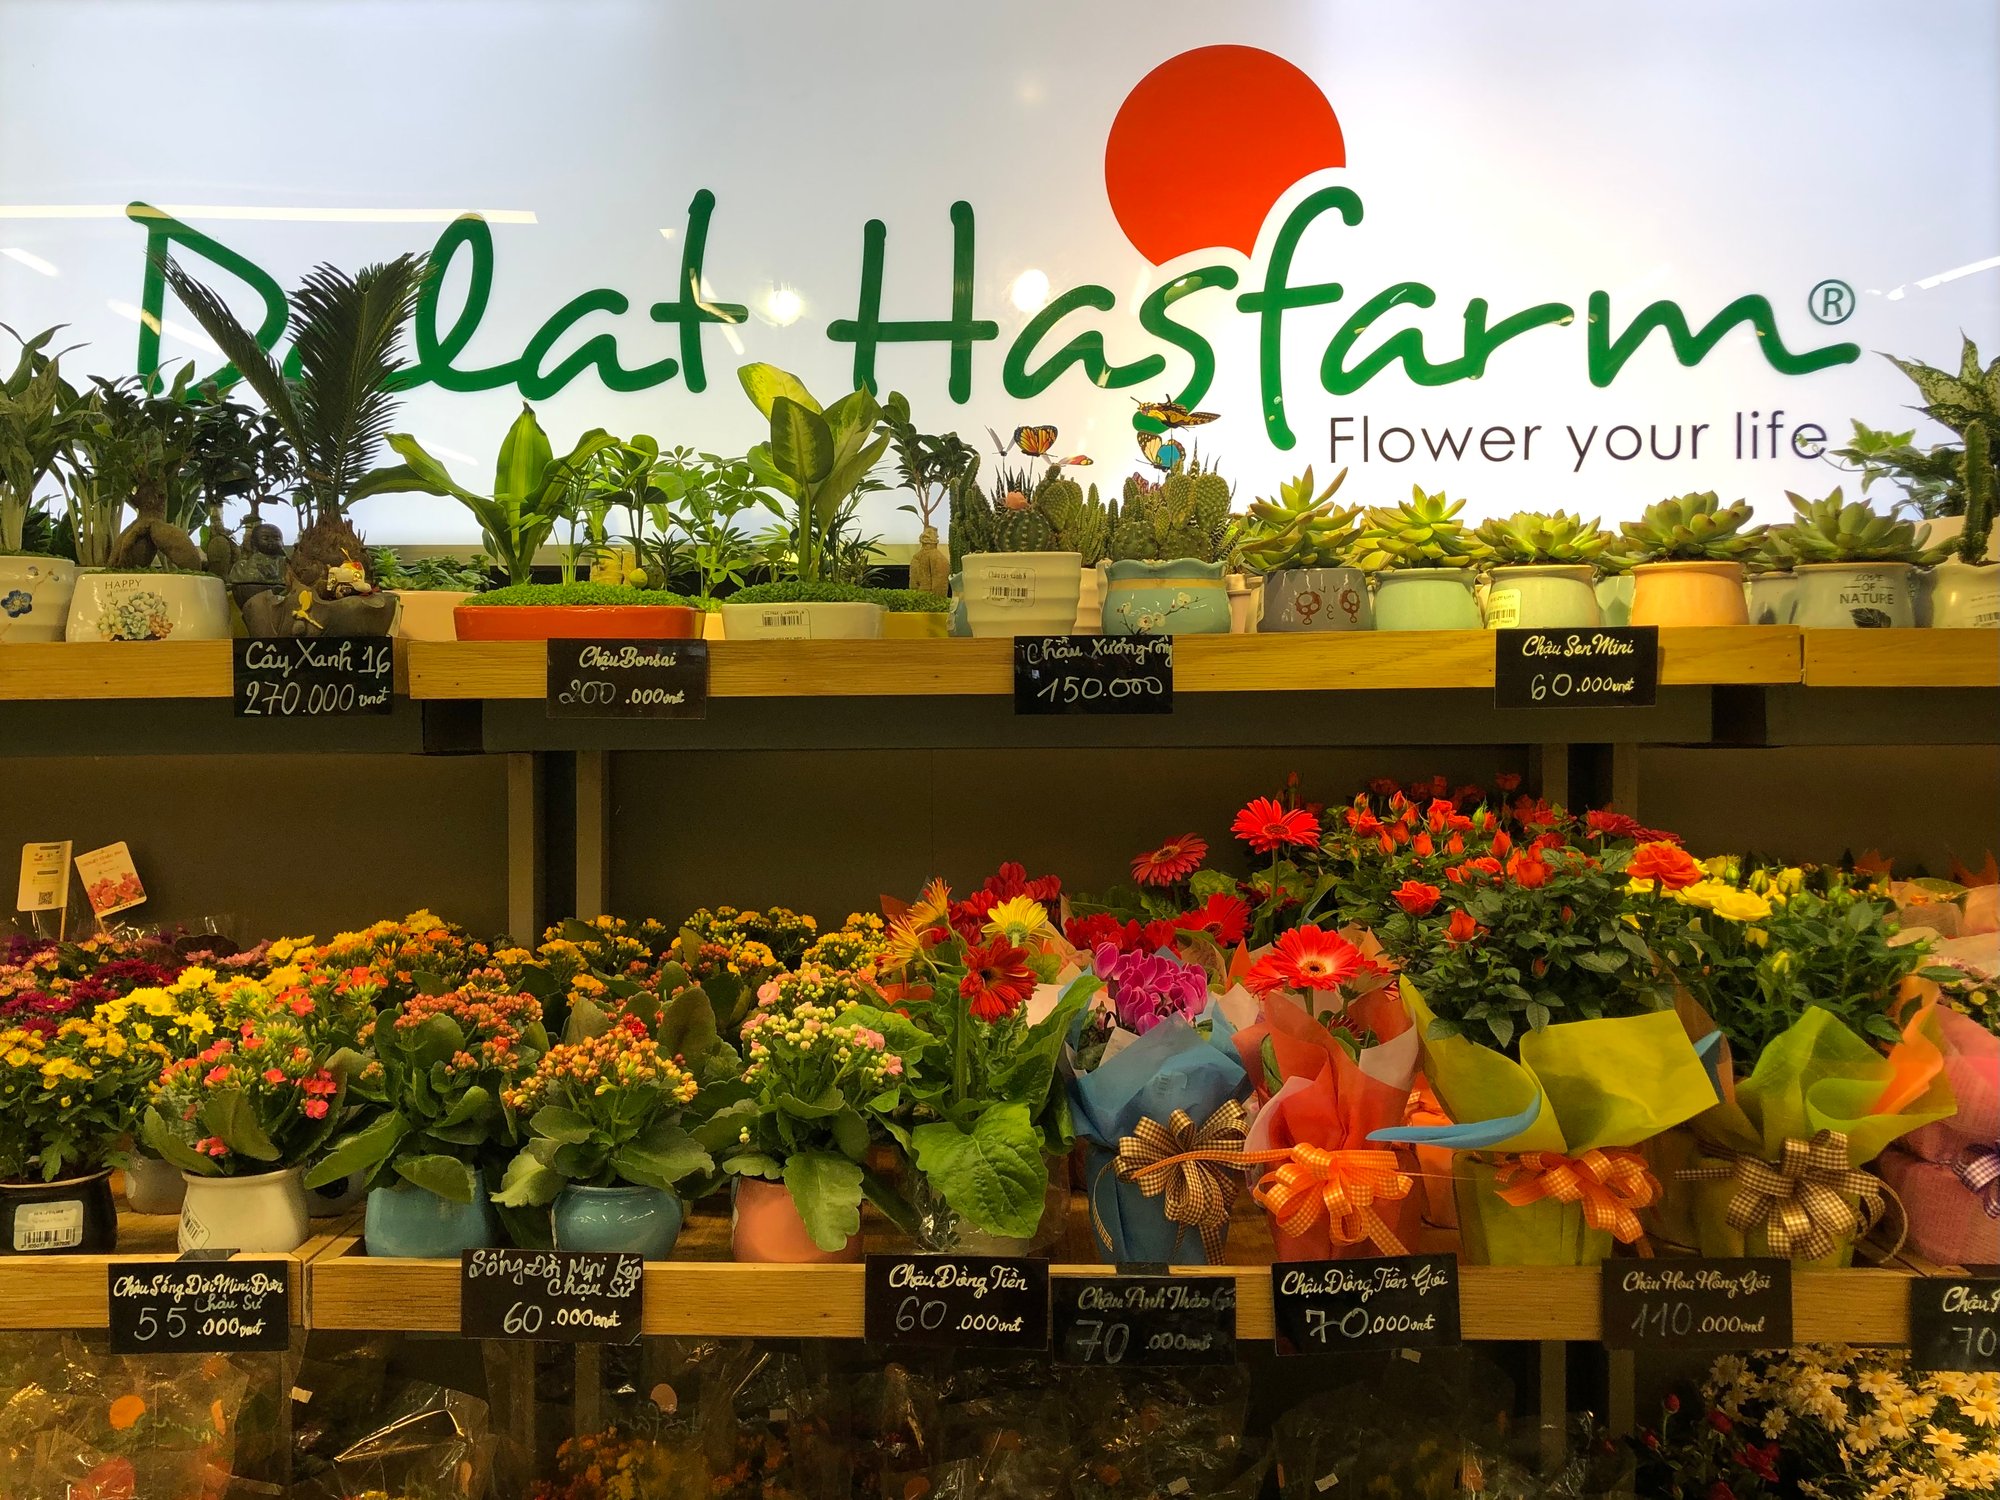 Quầy kệ Dalat Hasfarm trong siêu thị